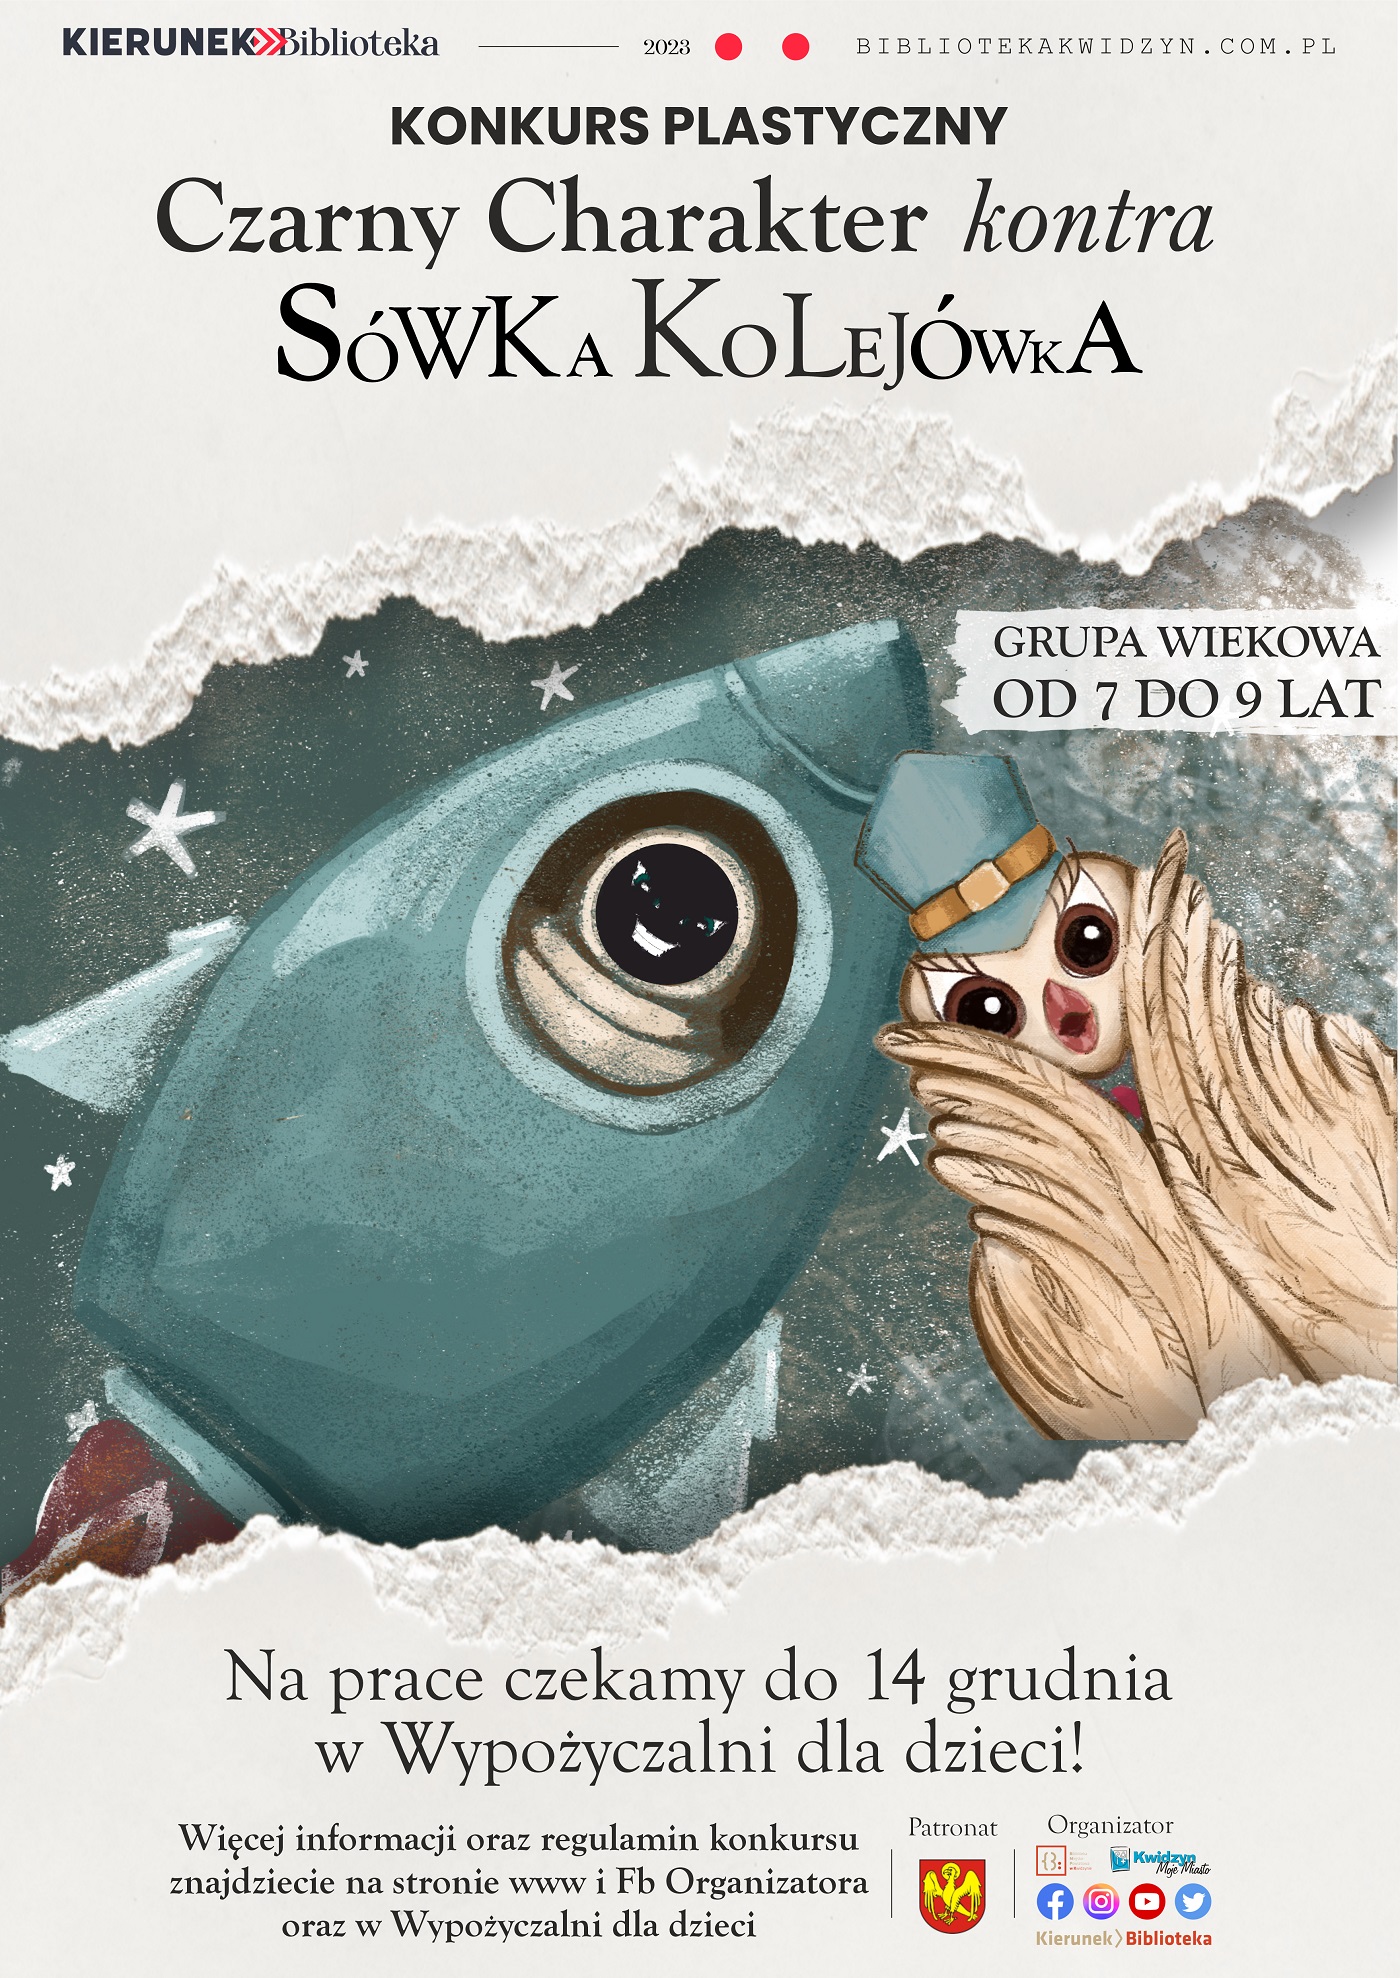 Swka Kolejwka